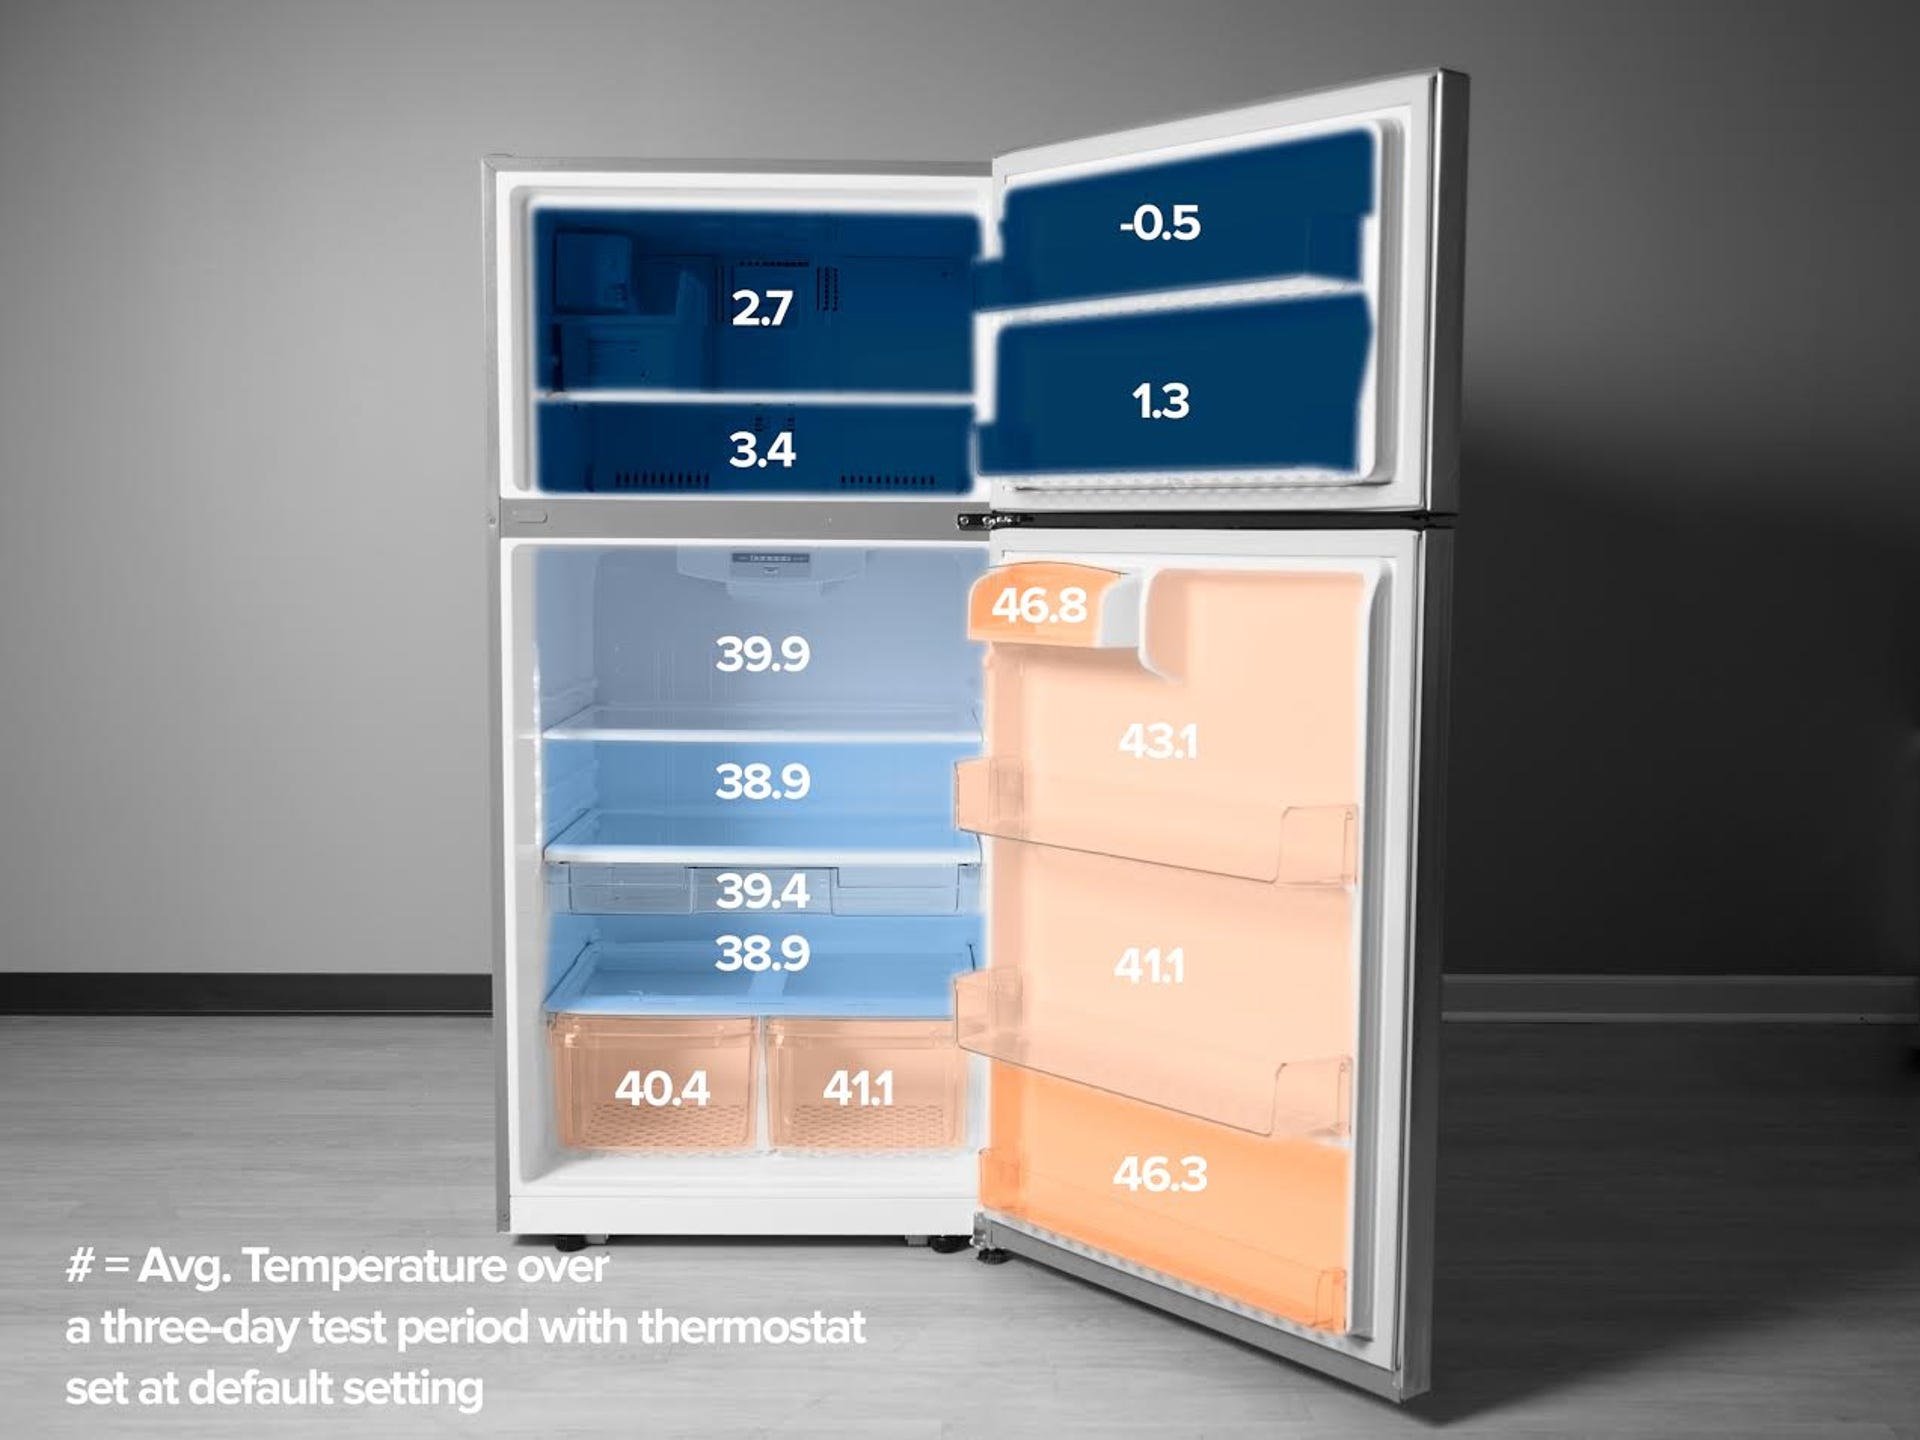 lg-ltcs24223s-top-freezer-refrigerator-default-setting-heat-map.jpg